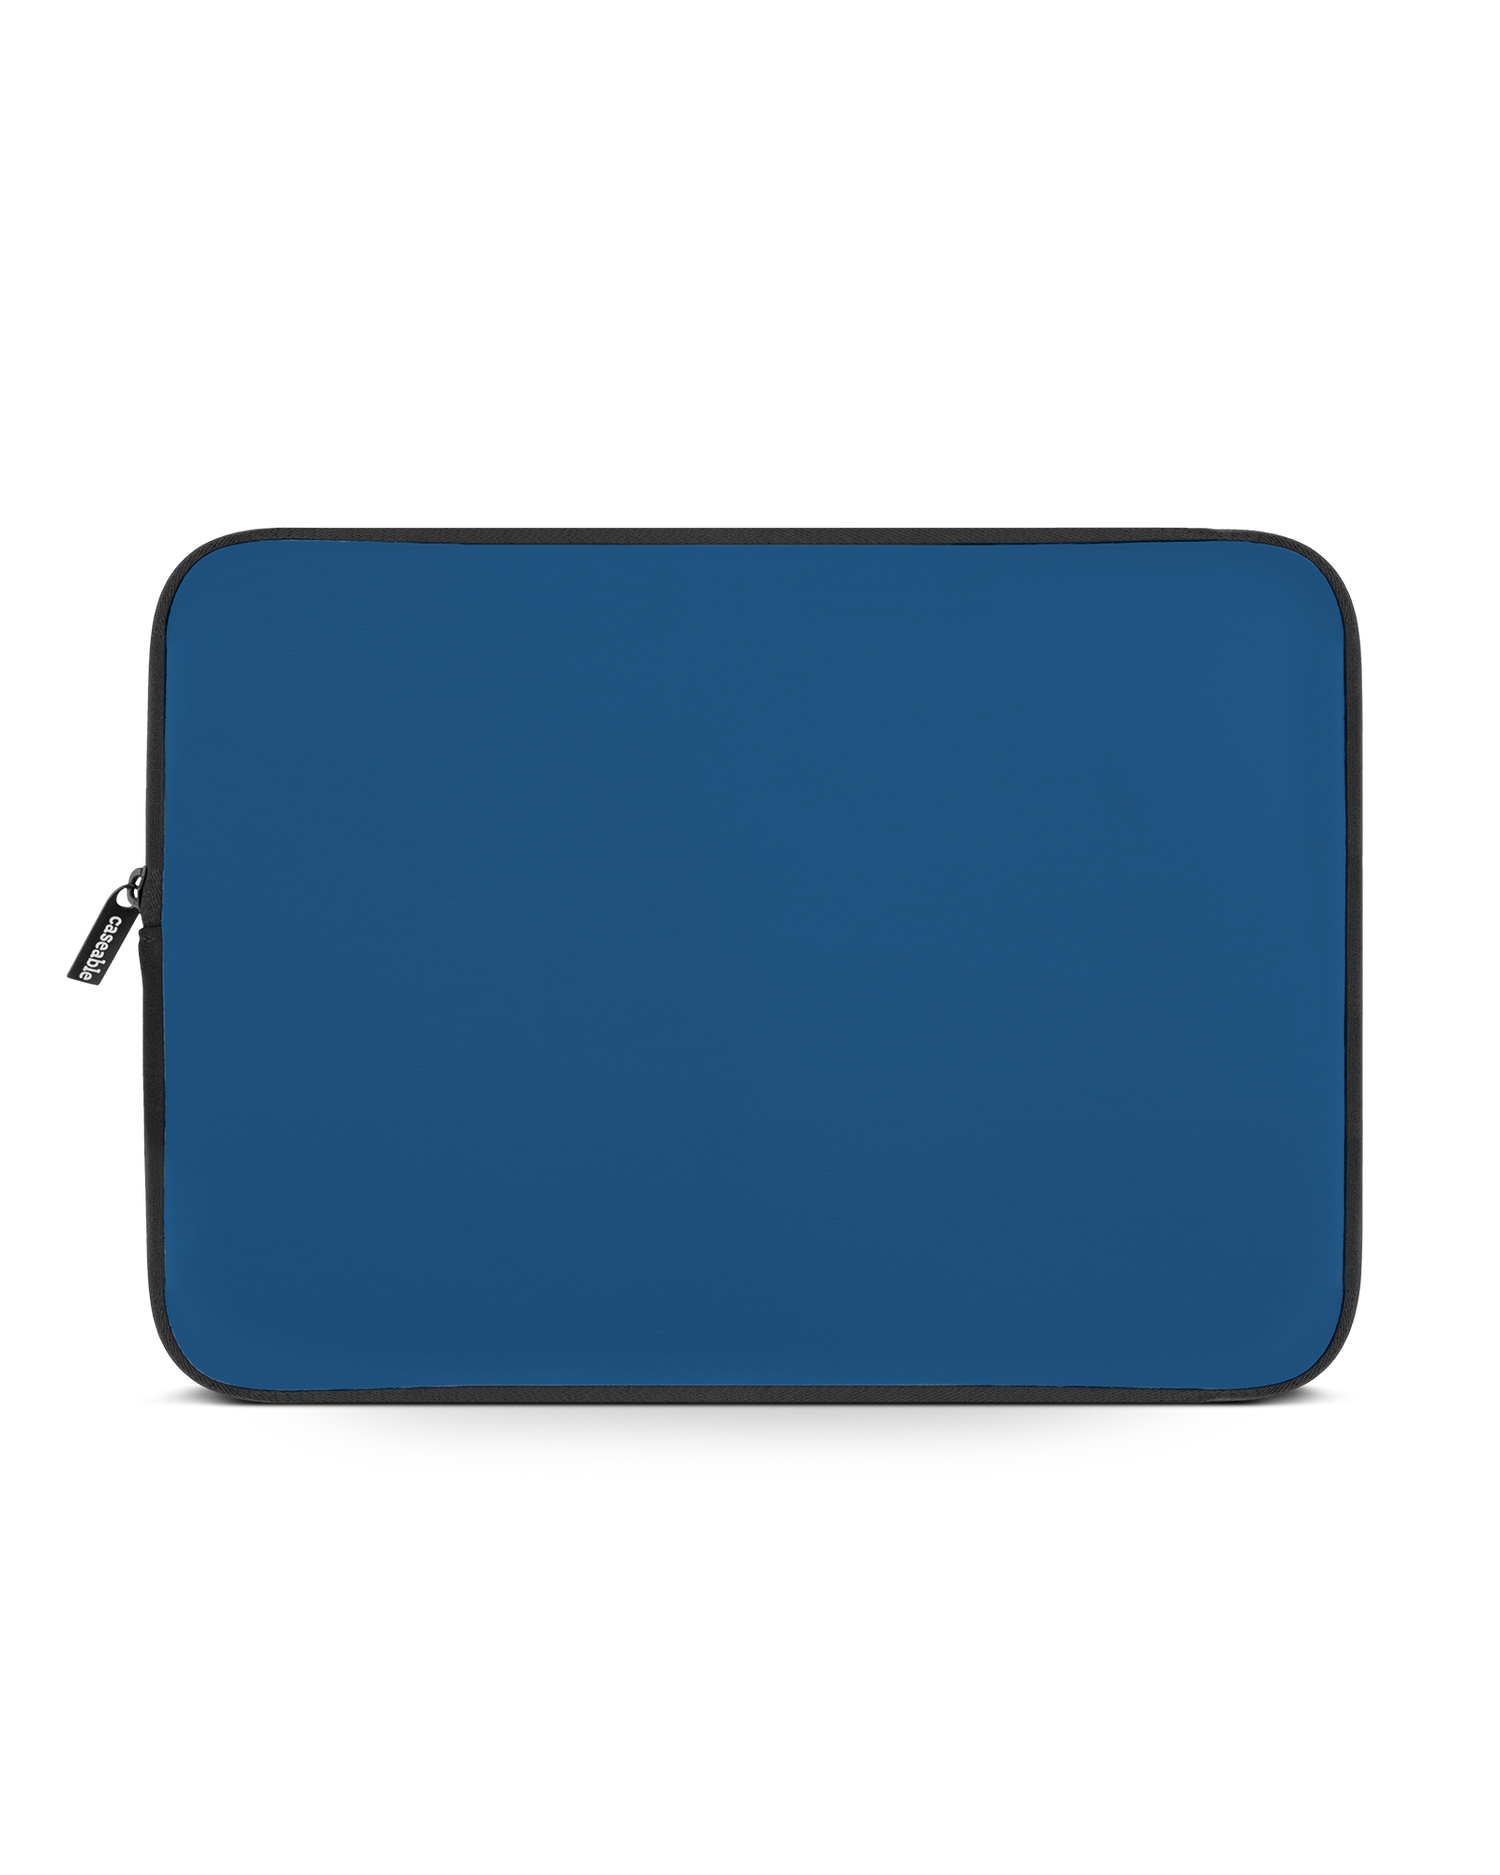 CLASSIC BLUE Laptop Case 14-15 inch: Front View